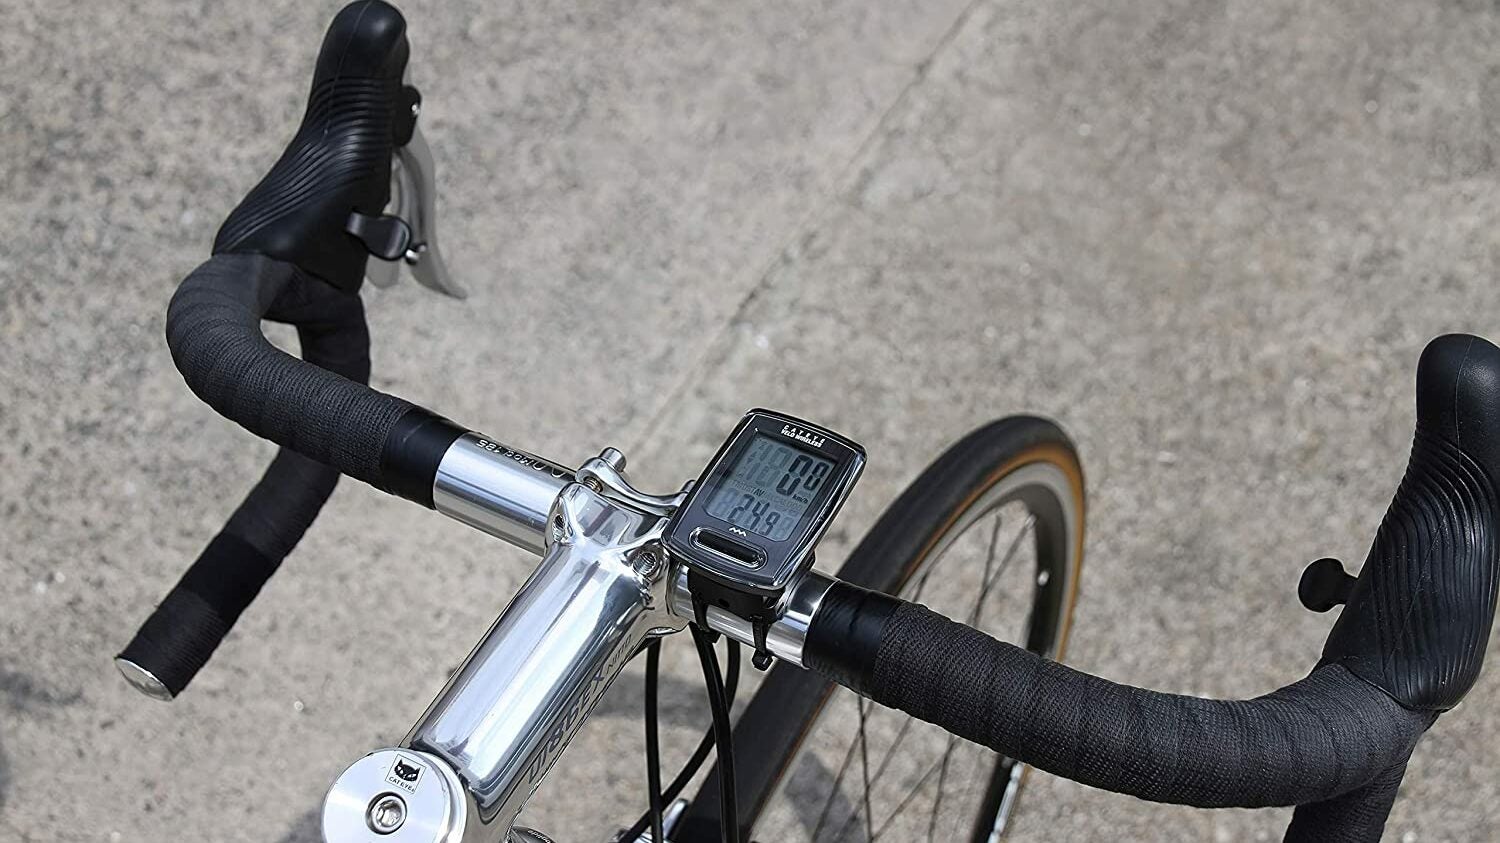 INBIKE Wired Bicycle Odometer Waterproof Backlight LCD Digital Cycling Bike Computer Speedometer Suit for Most Bikes 